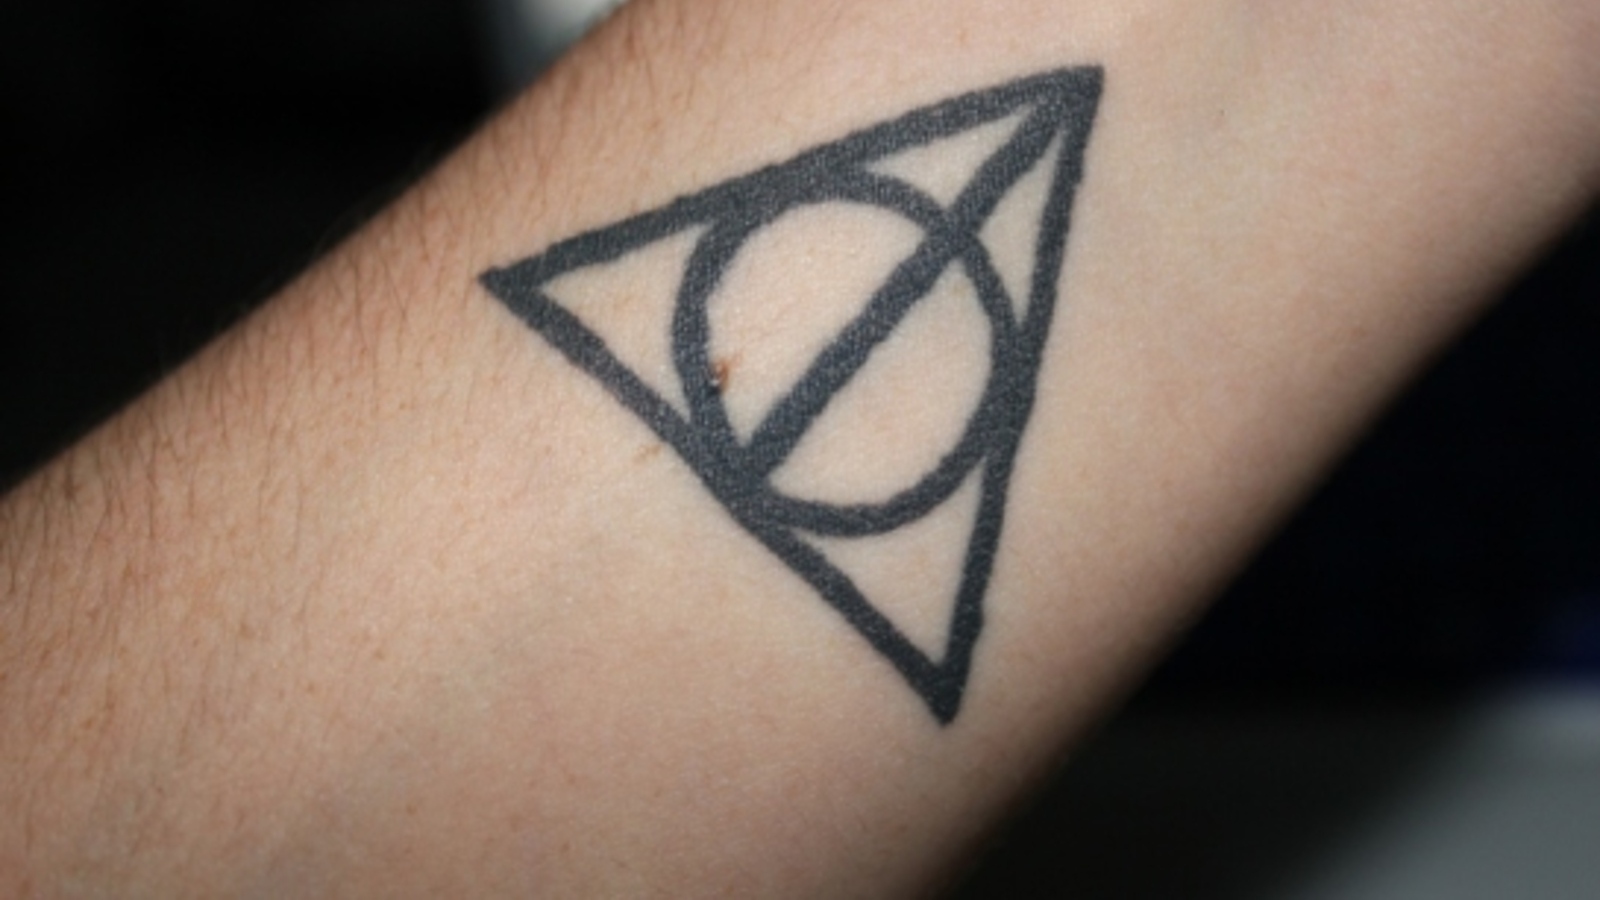 1. "Deathly Hallows symbol tattoo" - wide 9